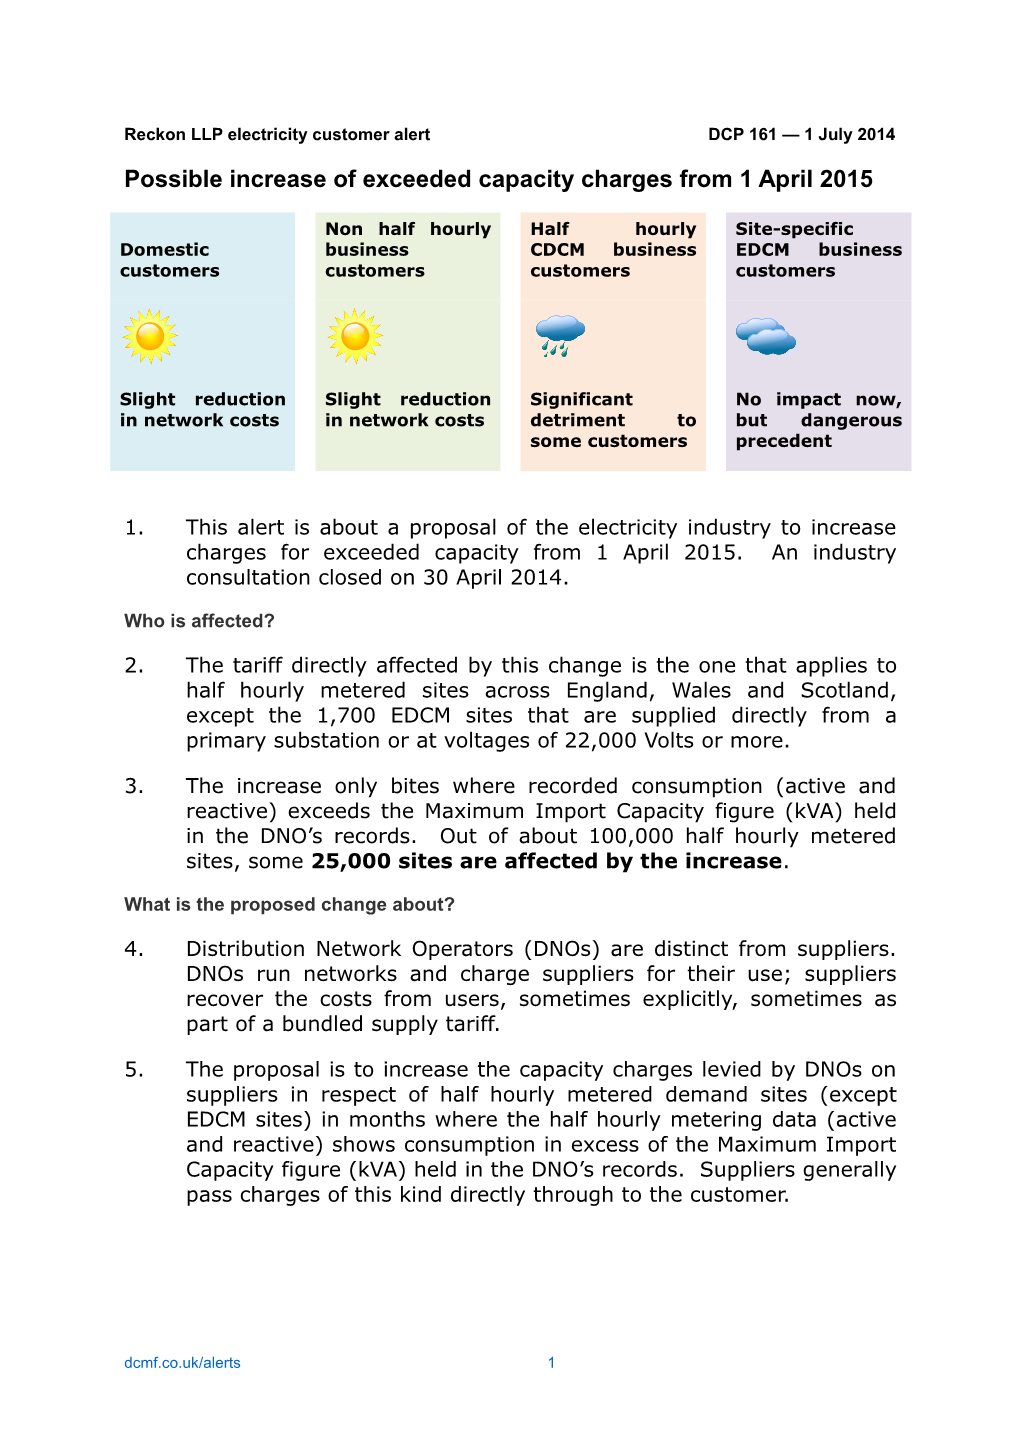 Reckon LLP Electricity Customer Alertdcp 161 1 July 2014